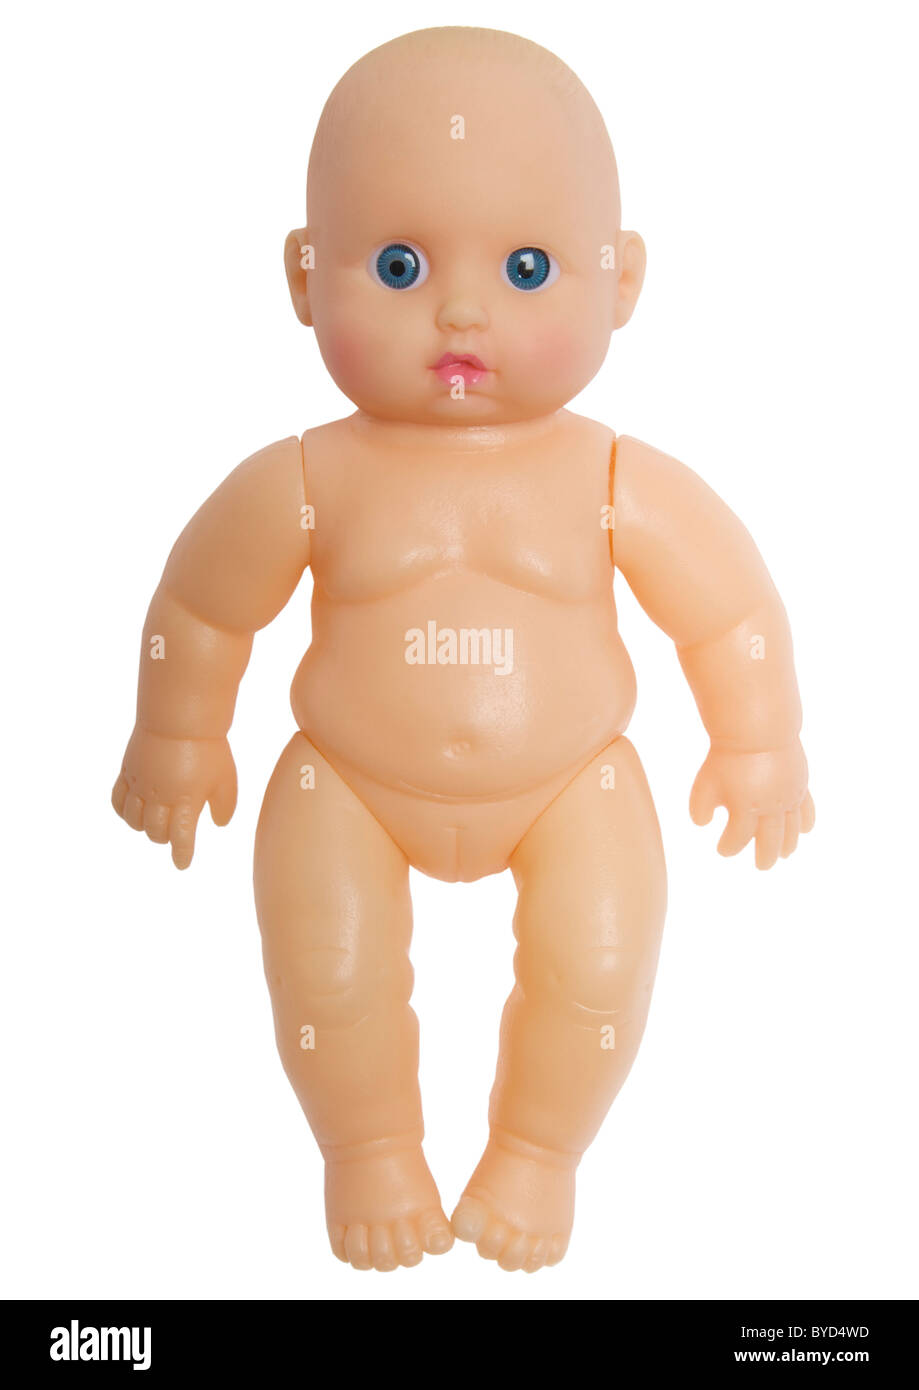 Baby doll on white background Stock Photo